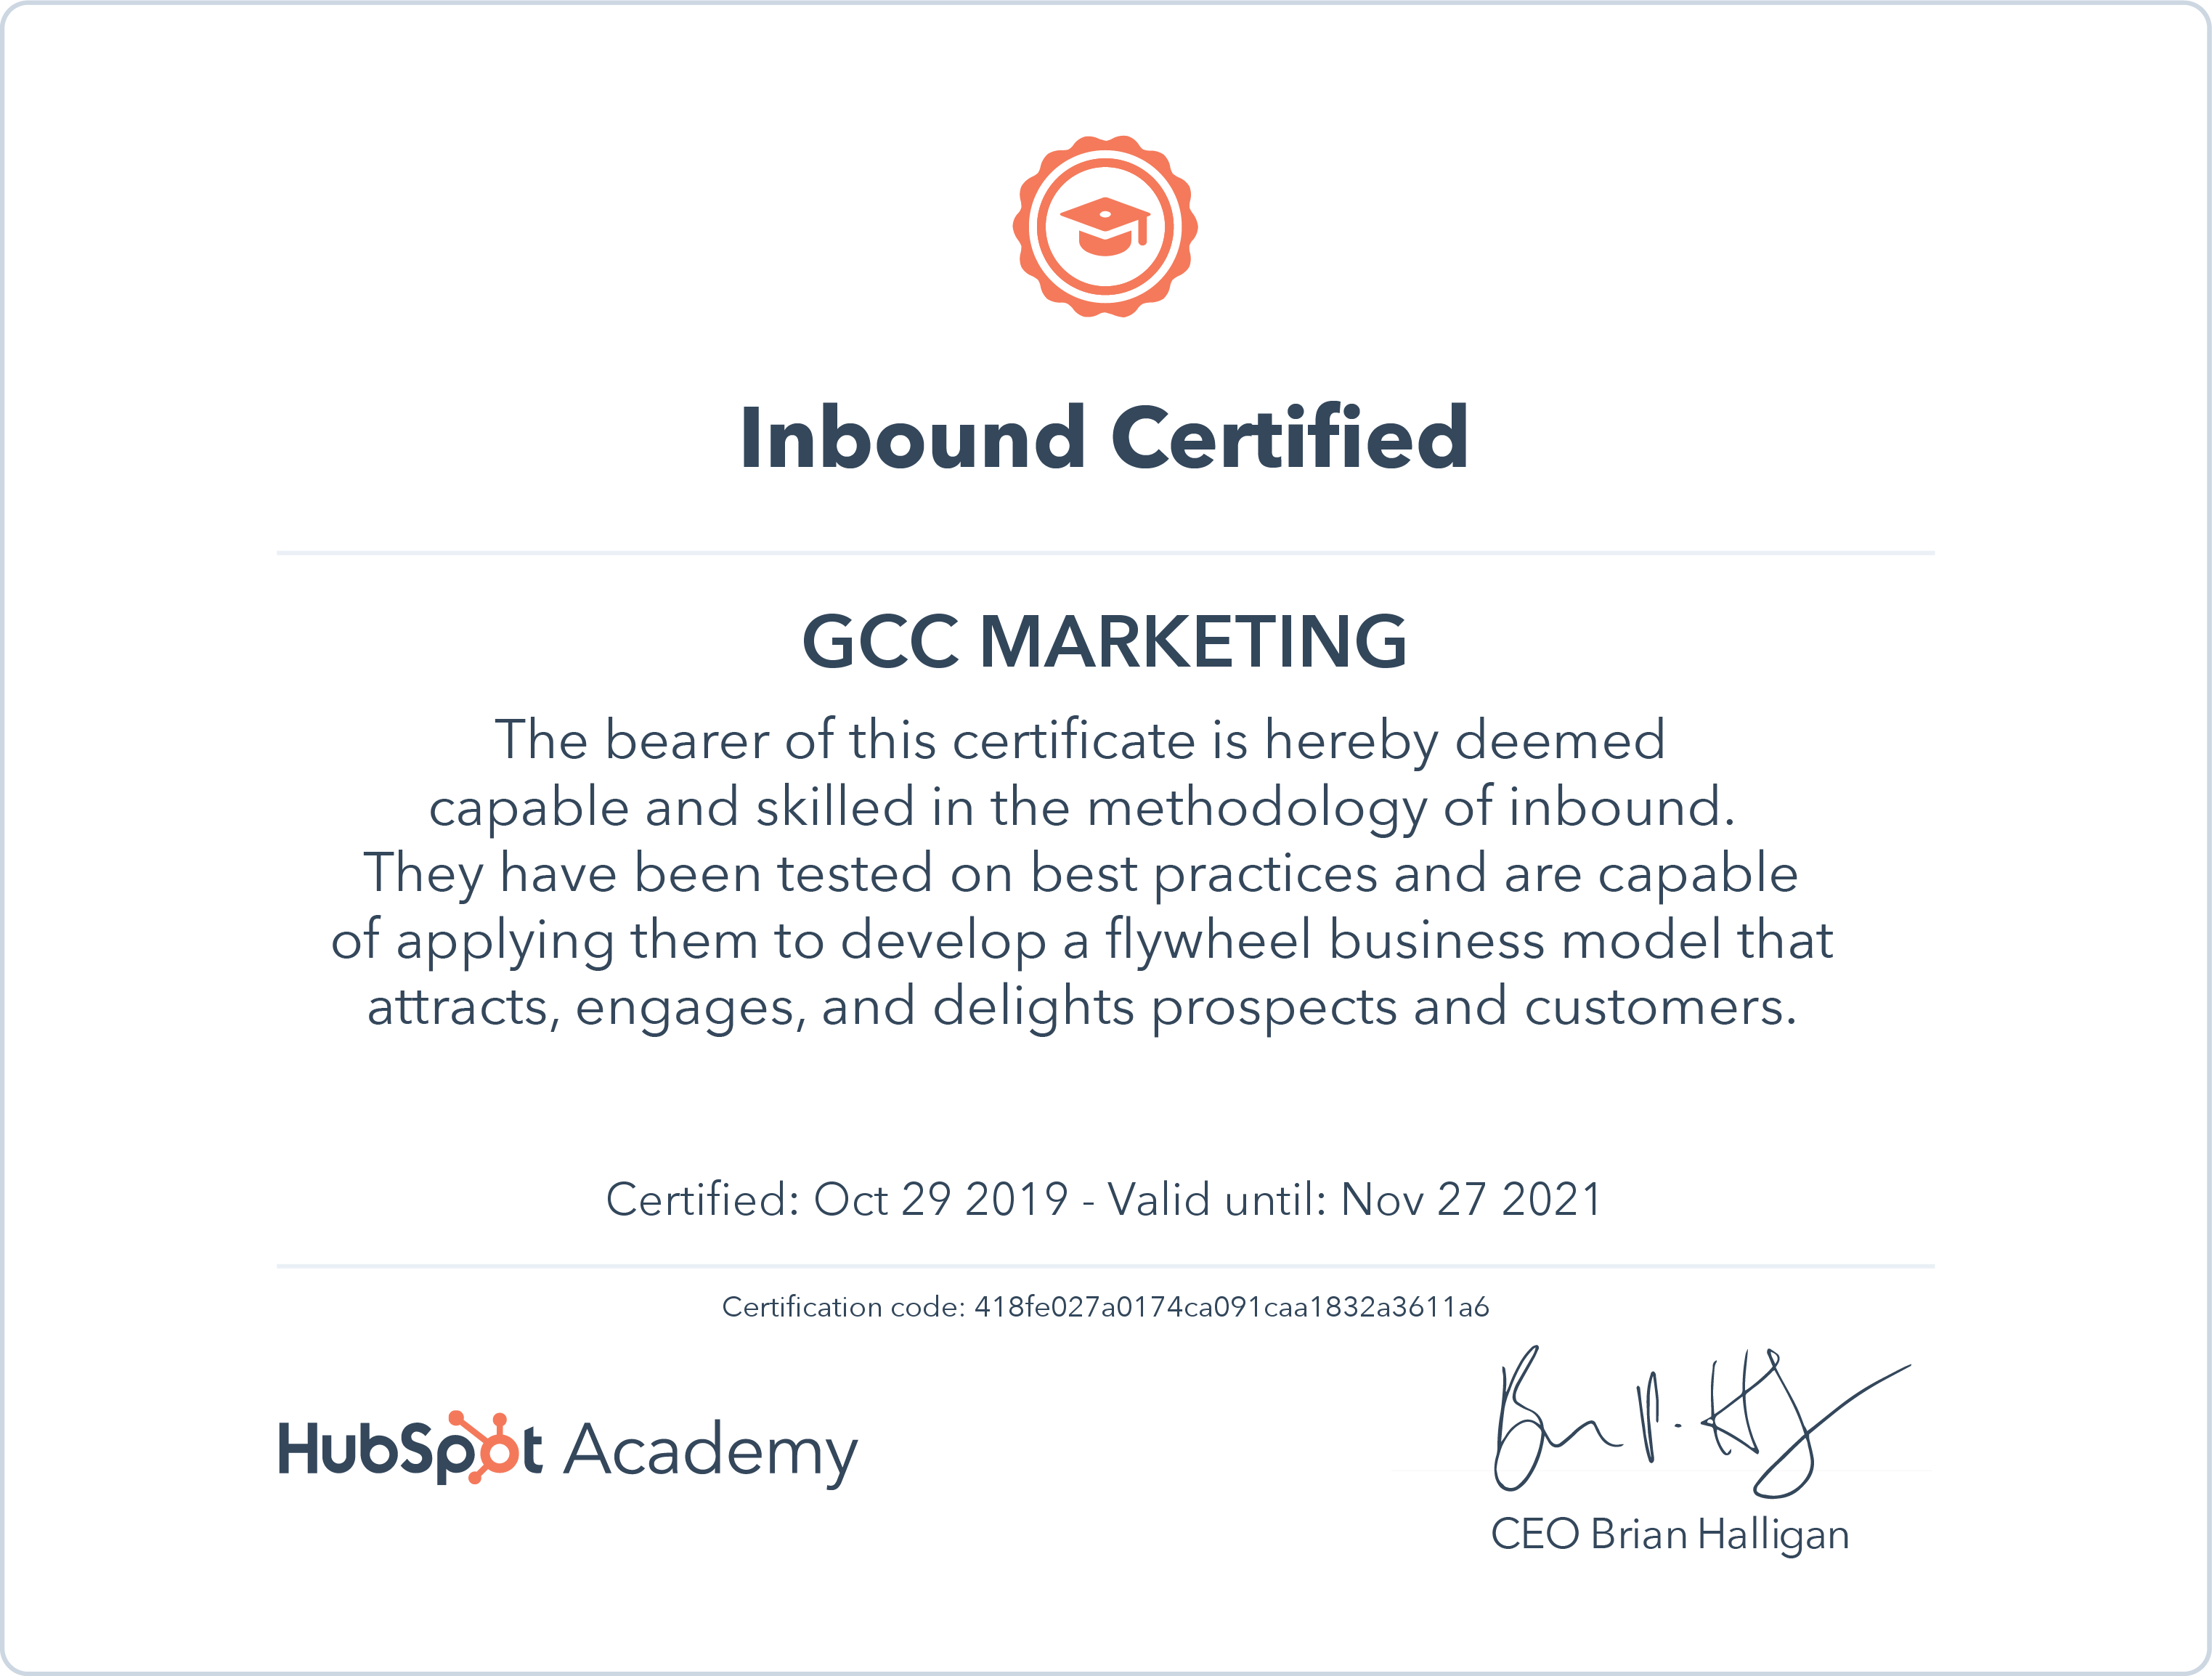 GCC Marketing Becomes Hubspot Academy Inbound Certified